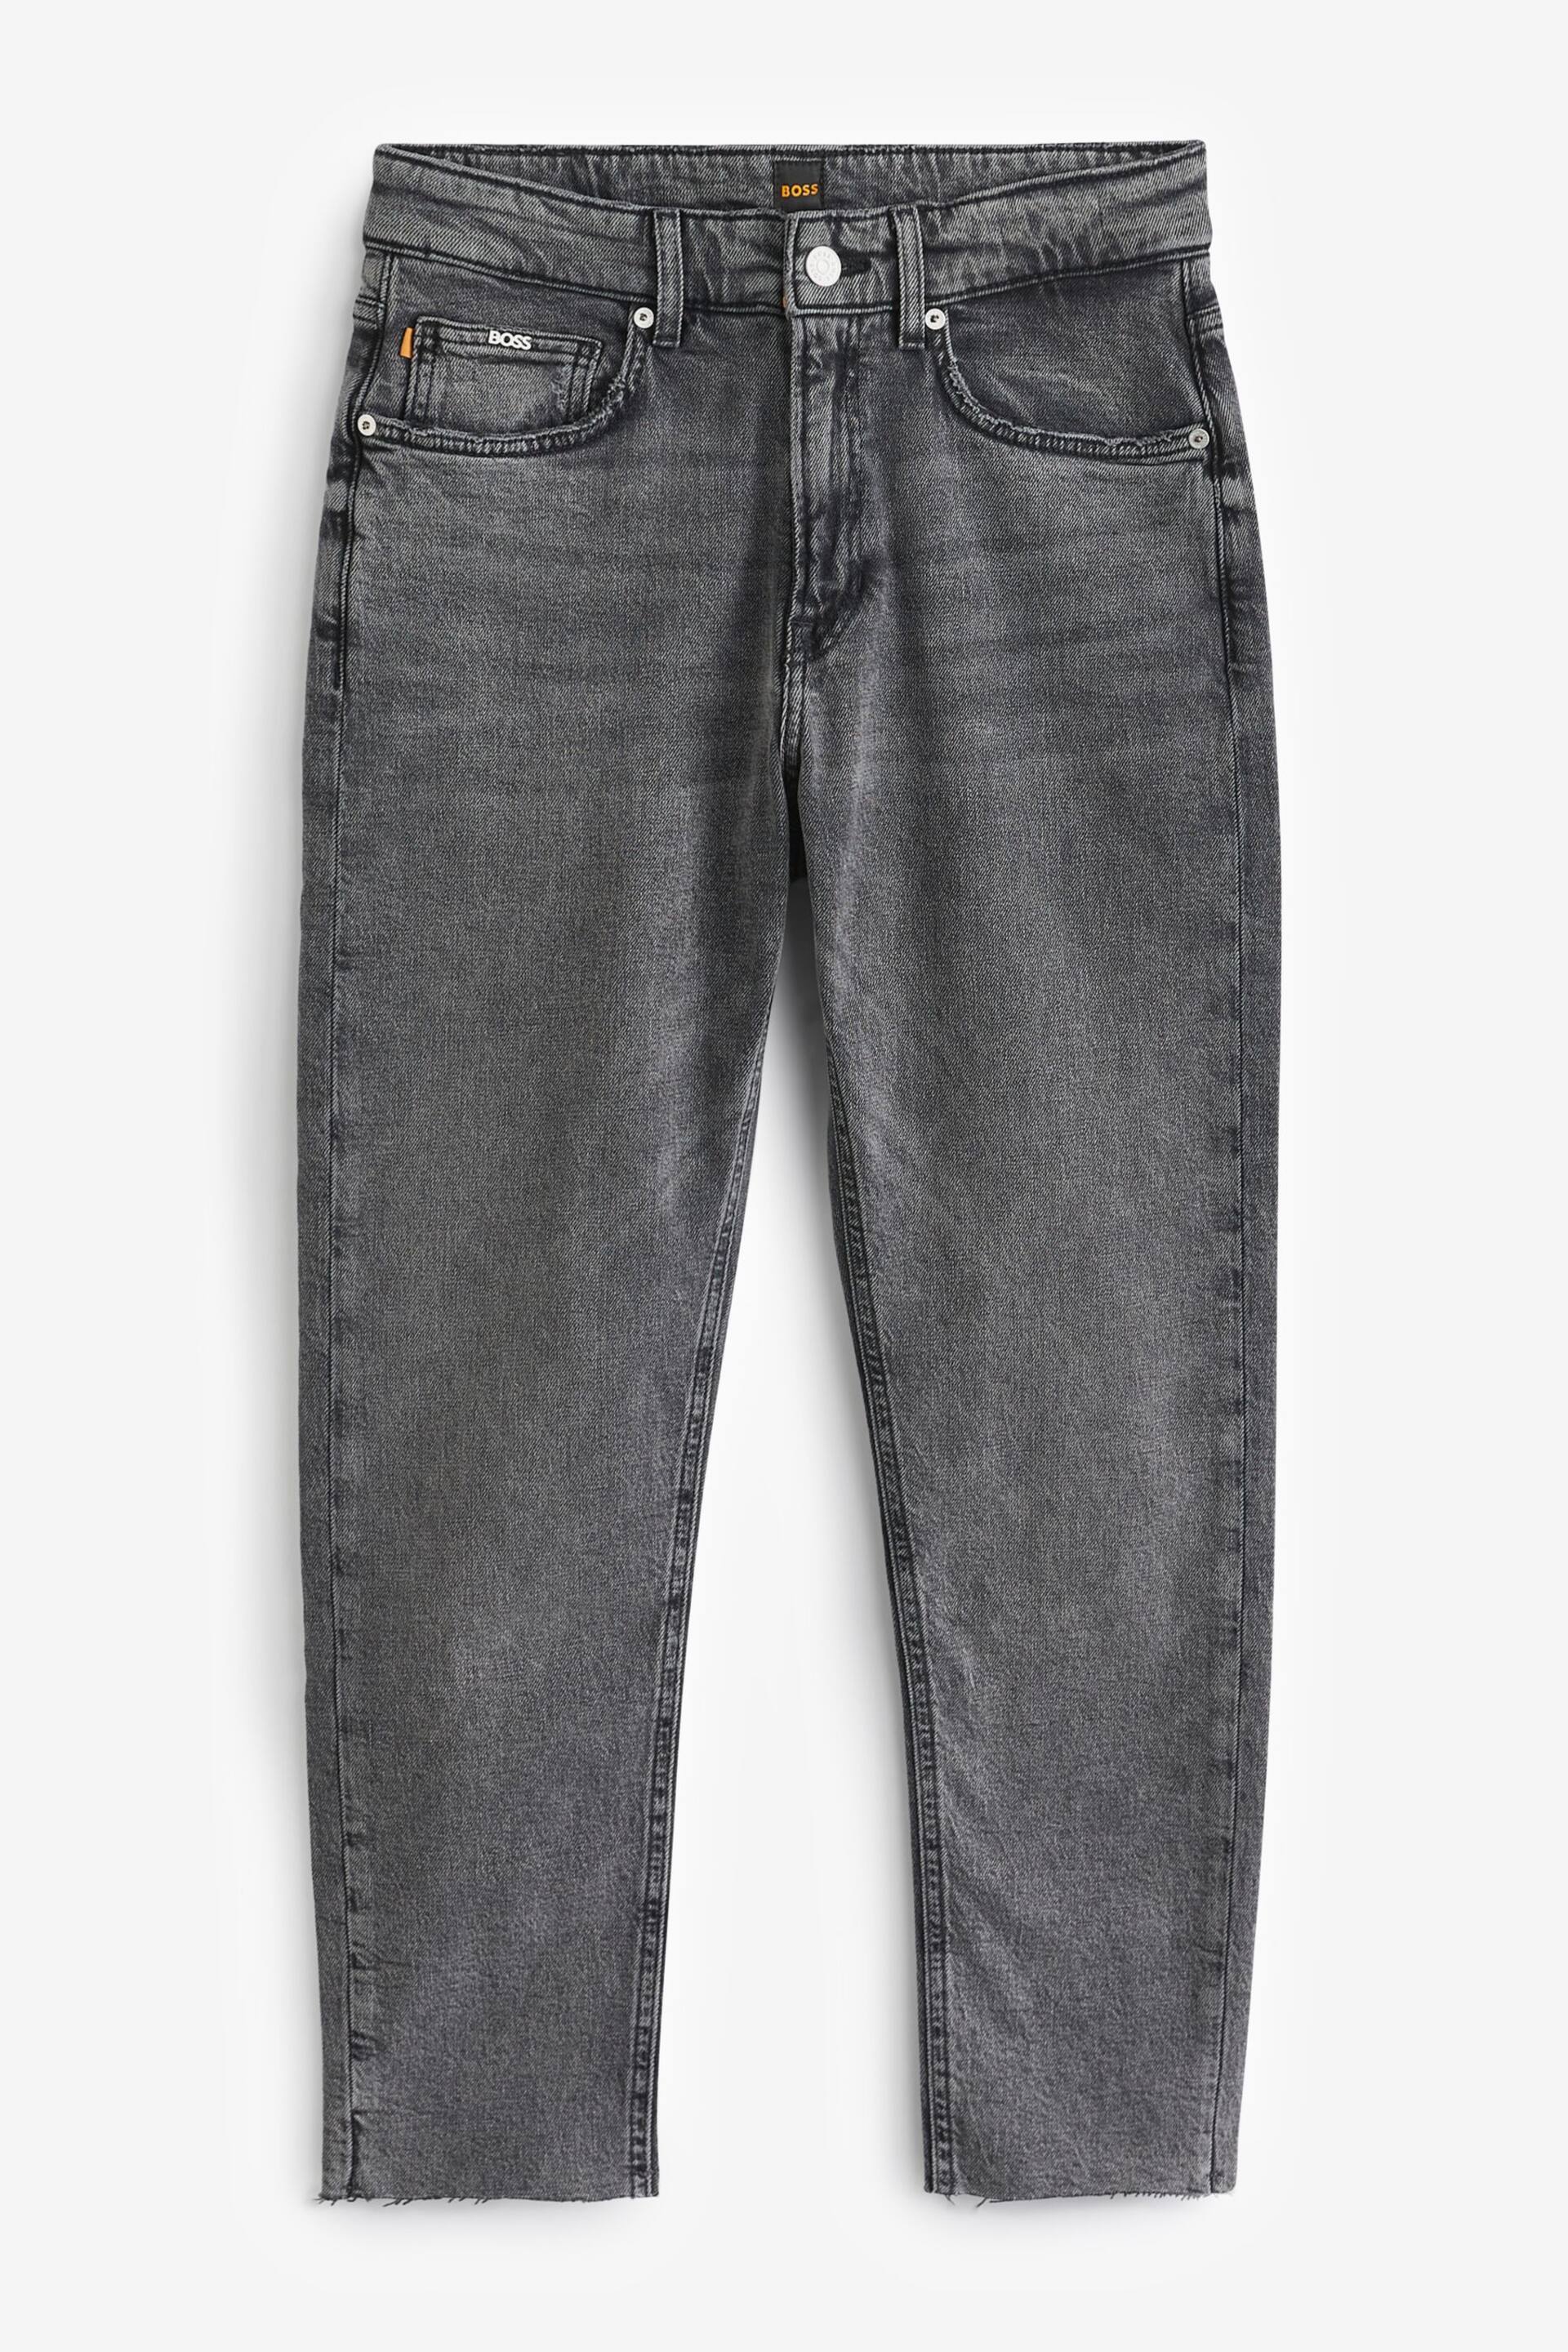 BOSS Grey Tapered Raw Hem Stretch Denim Jeans - Image 5 of 5